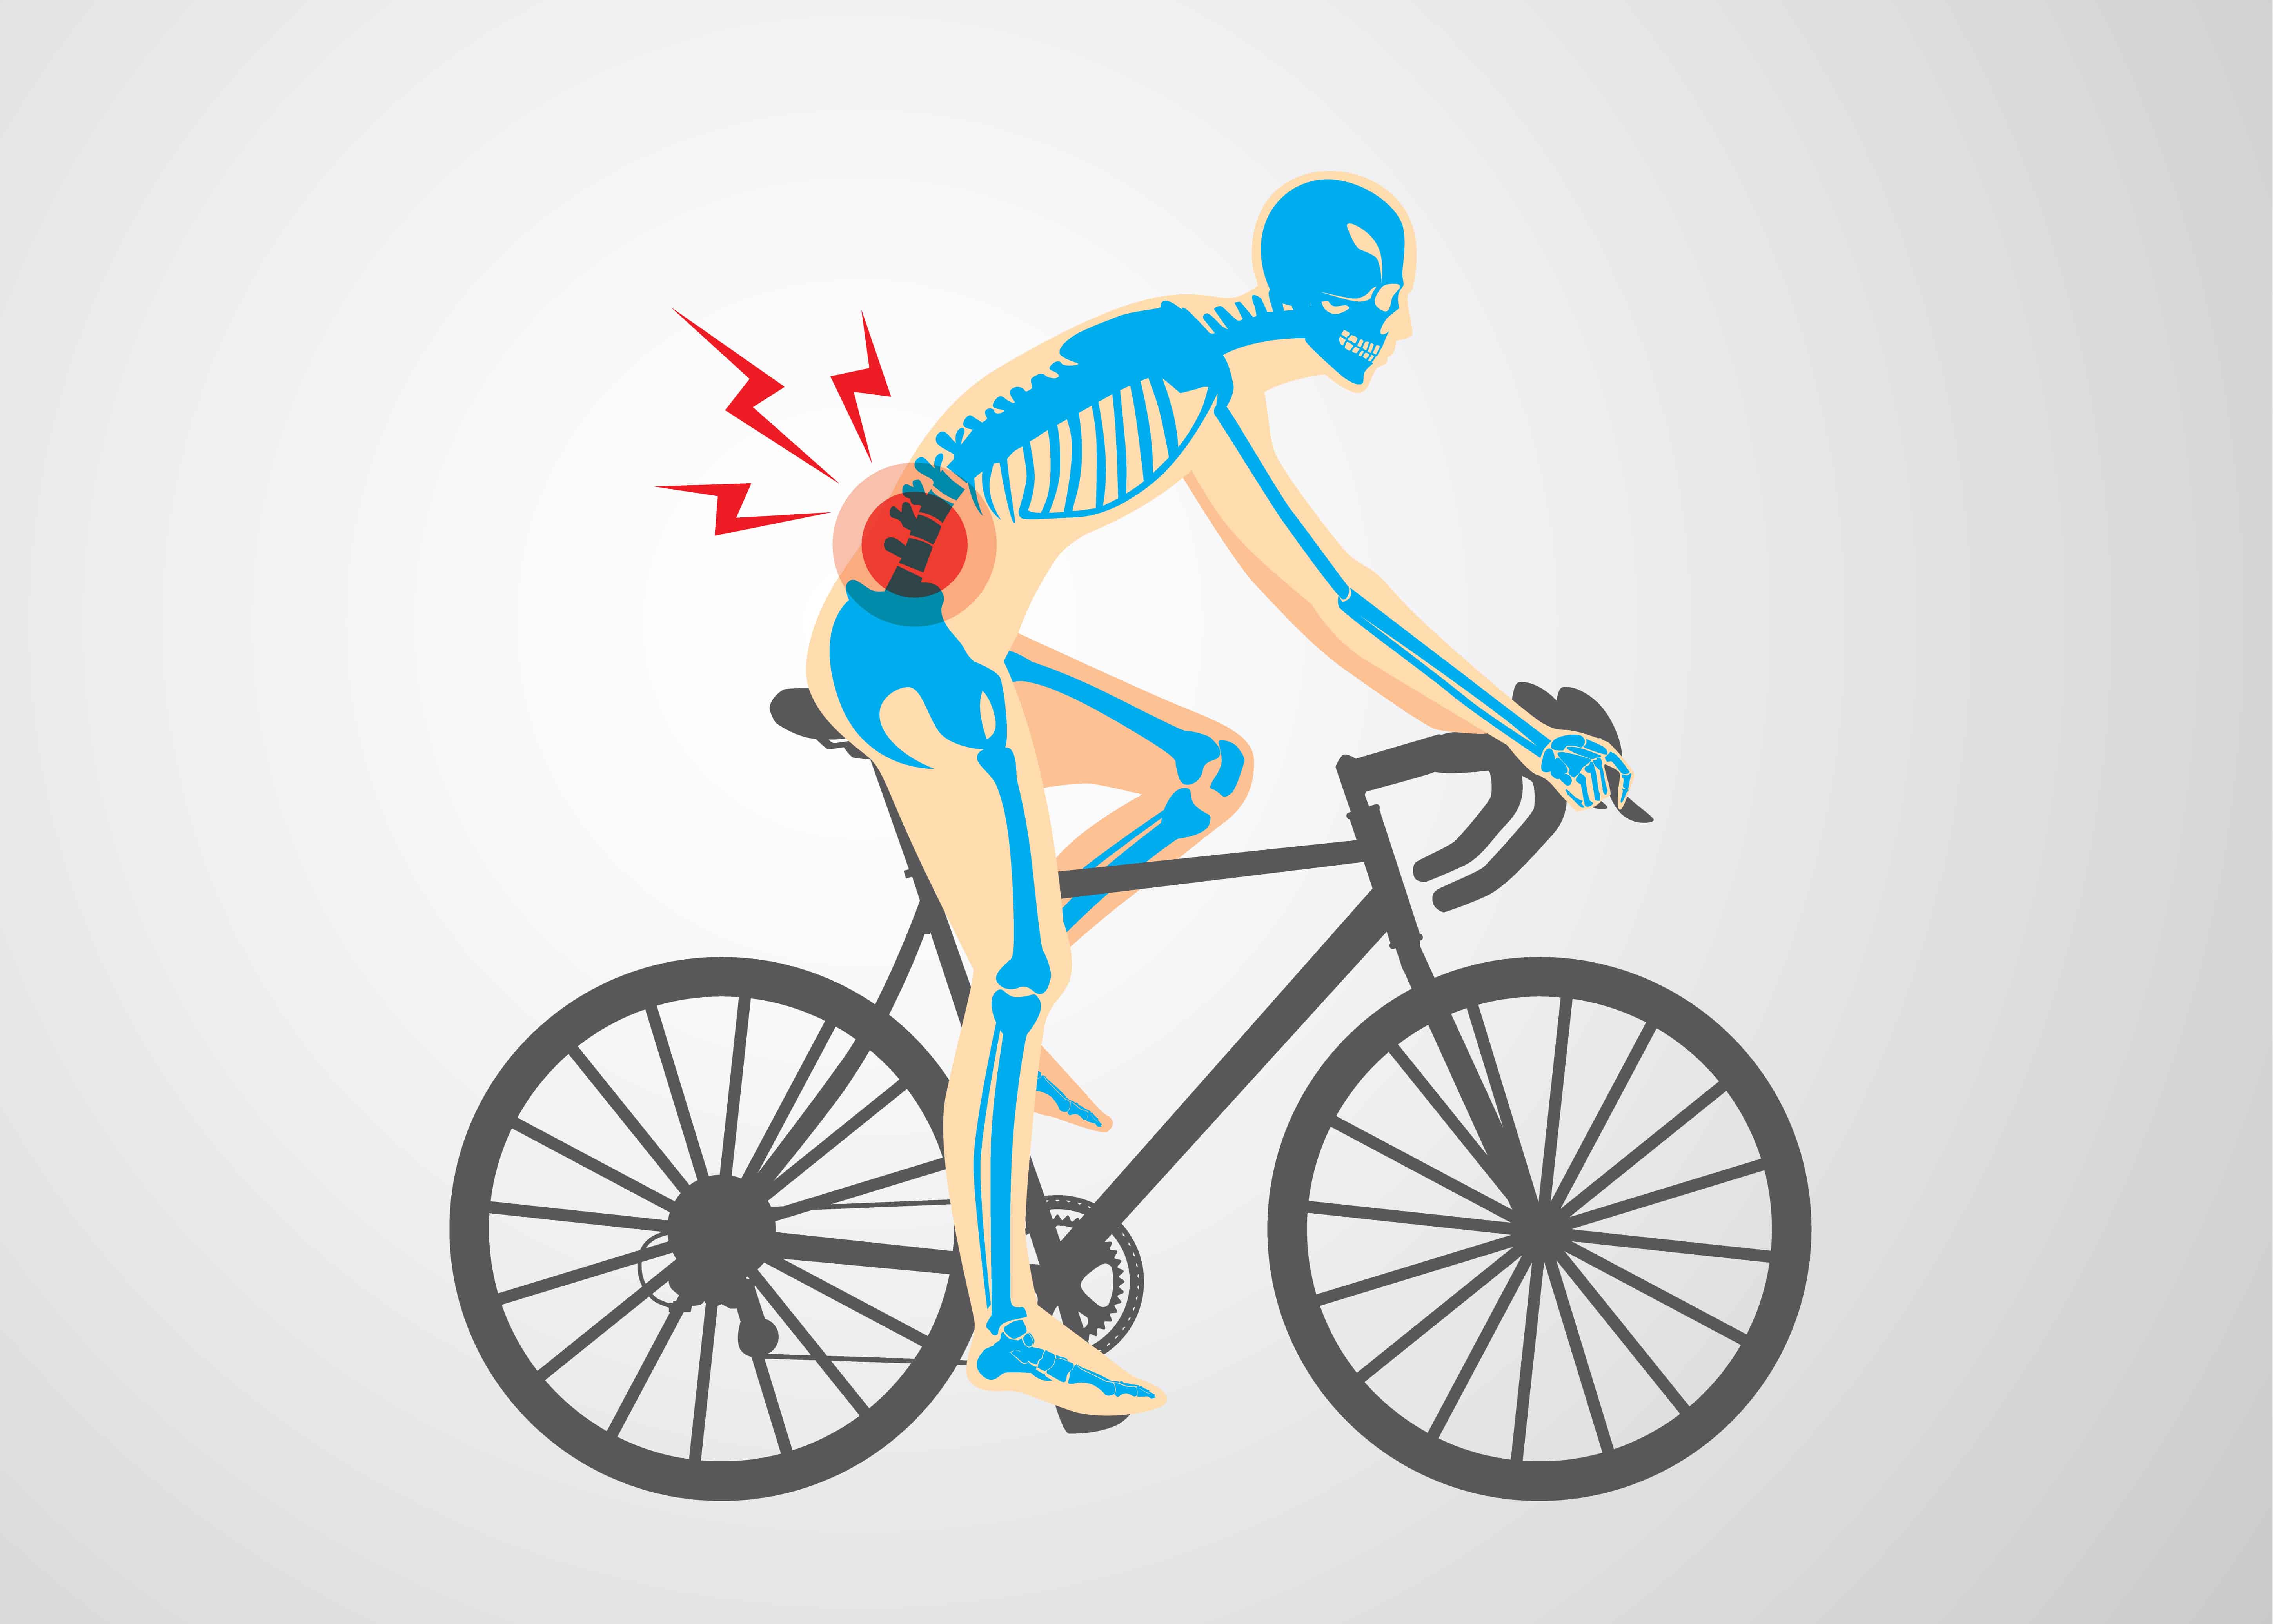 Proper Body Position on a Road Bike